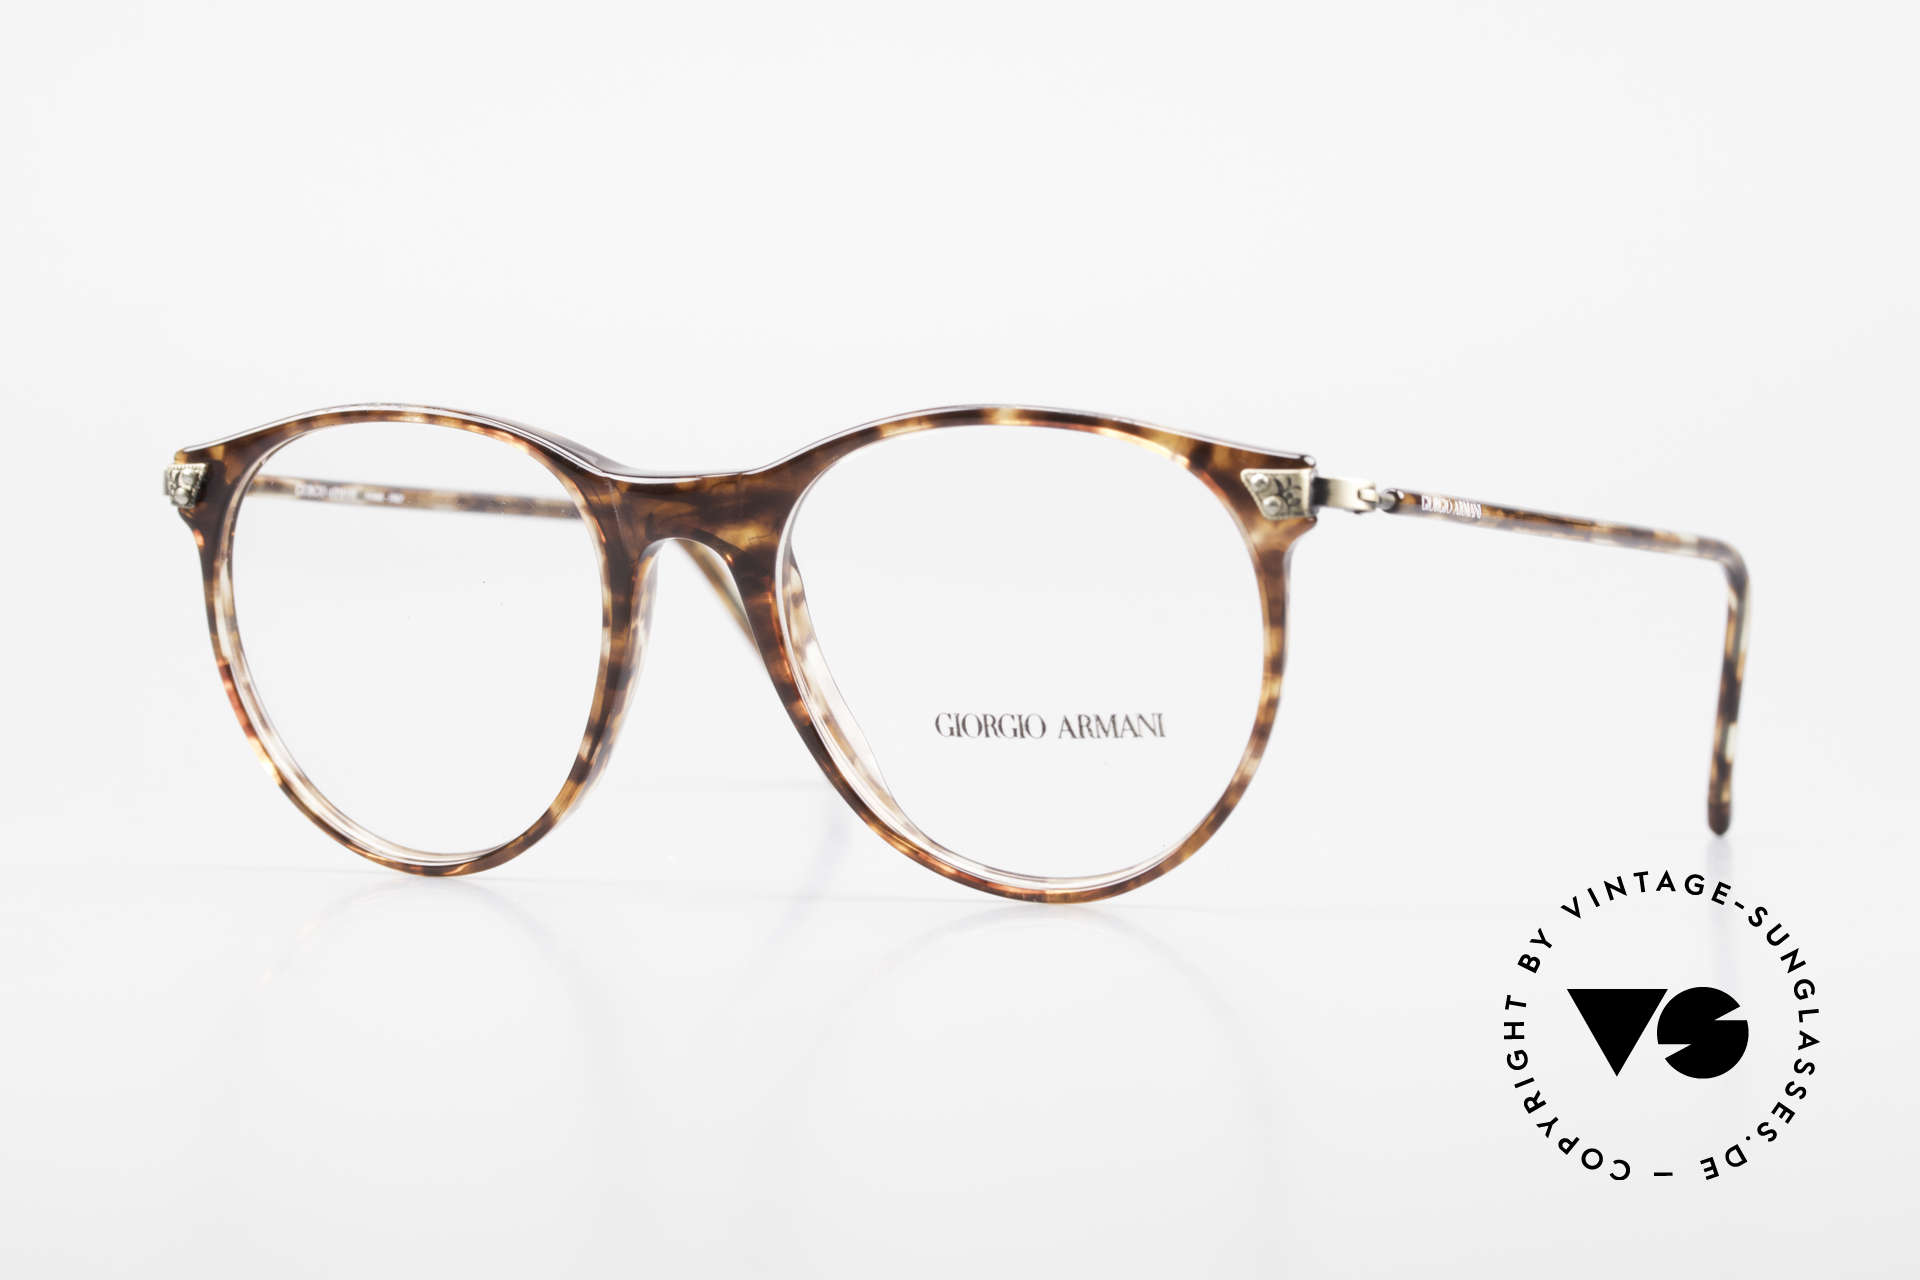 Giorgio Armani 330 True Vintage Unisex Glasses, true vintage eyeglass-frame by GIORGIO ARMANI, Made for Men and Women